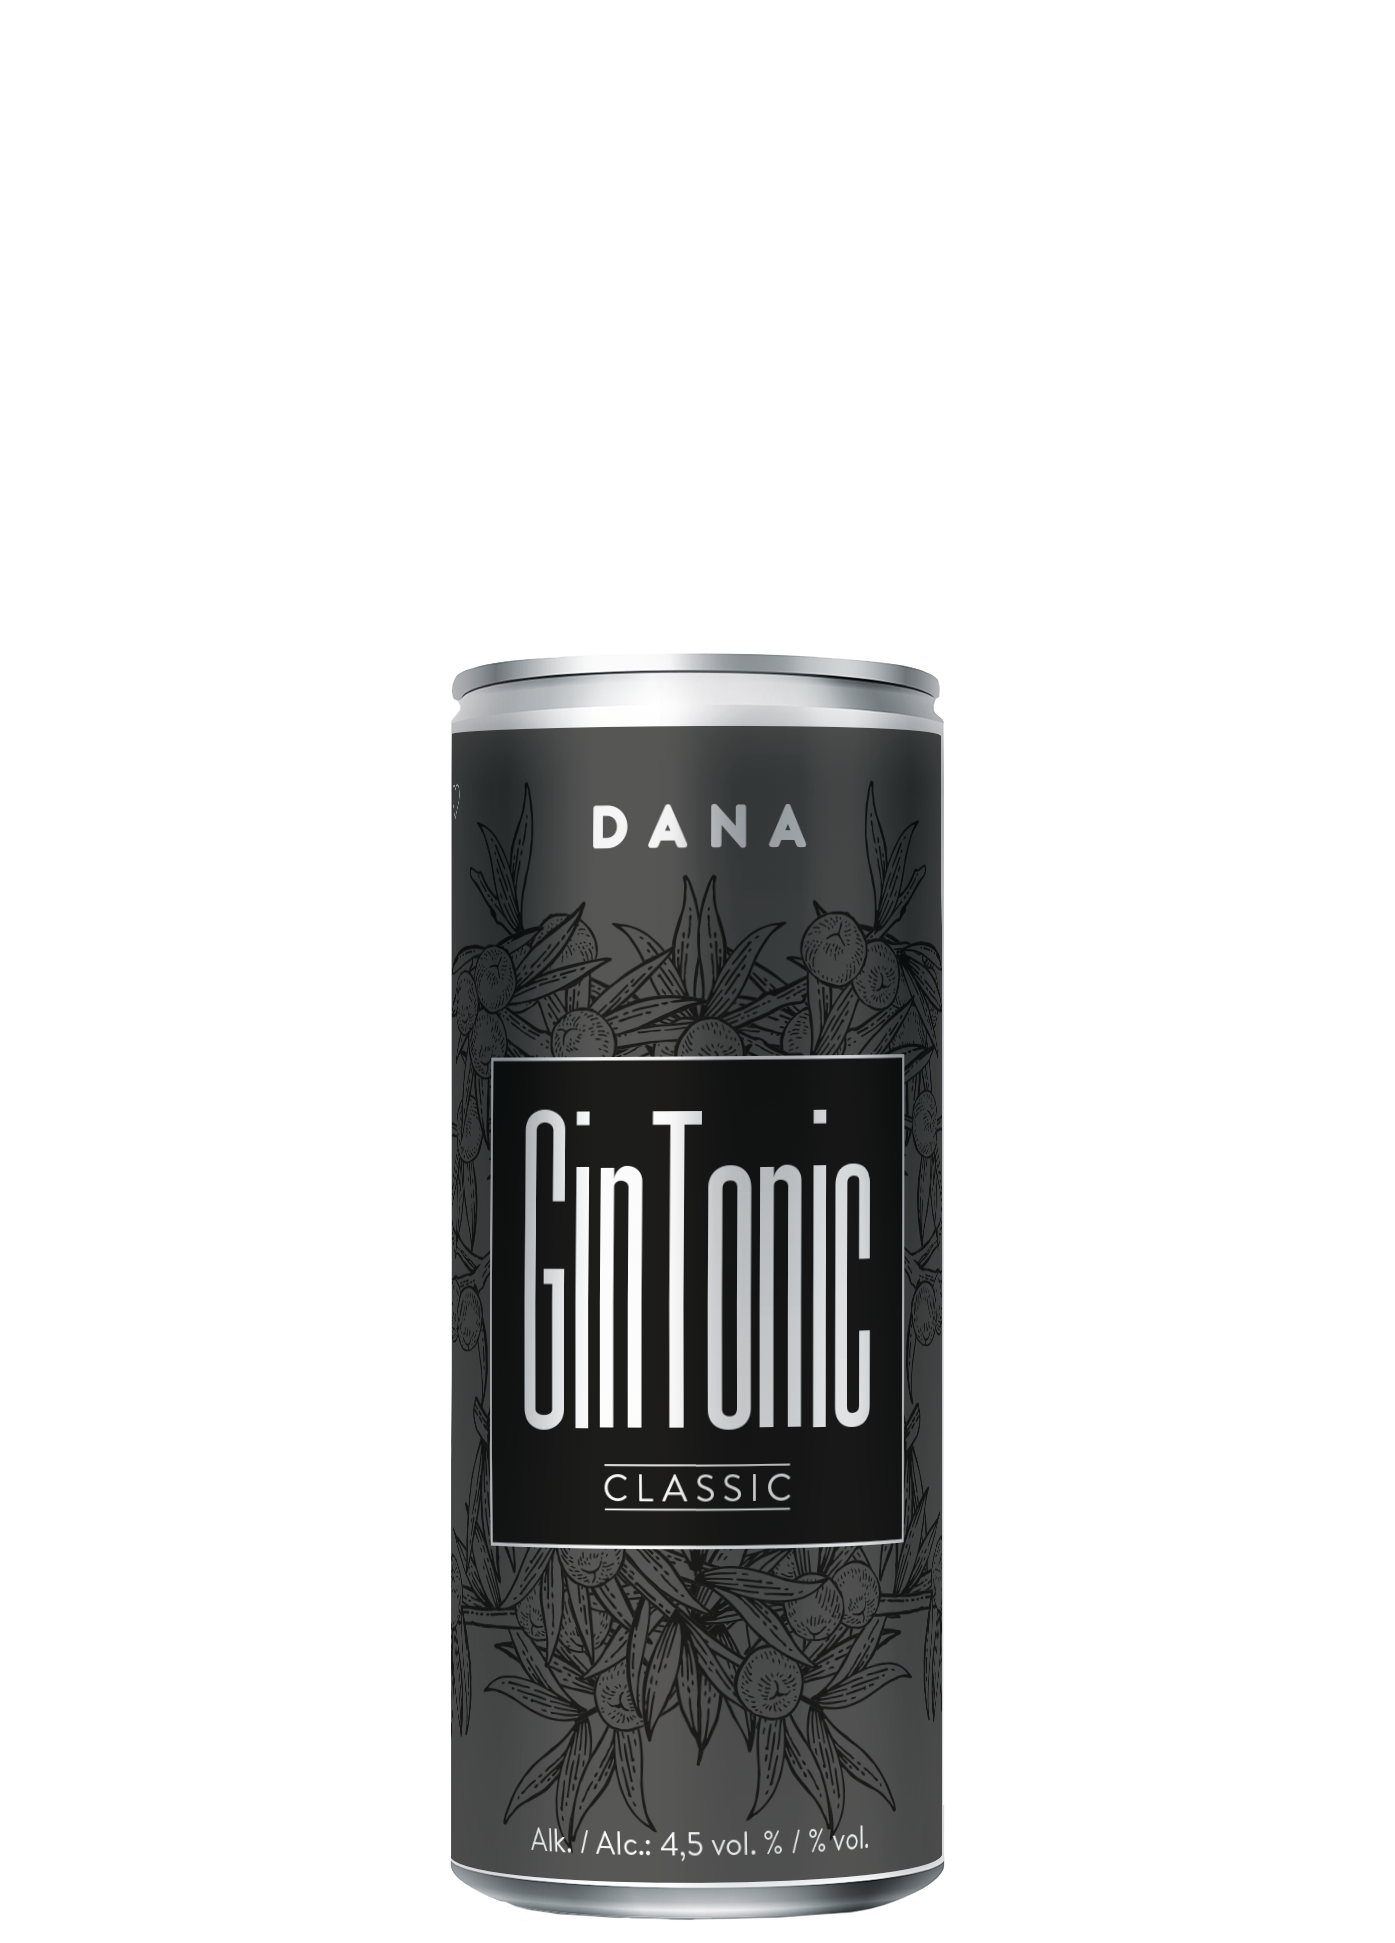 Dana Gin Tonik, classic, alk.: 4,5 vol. %